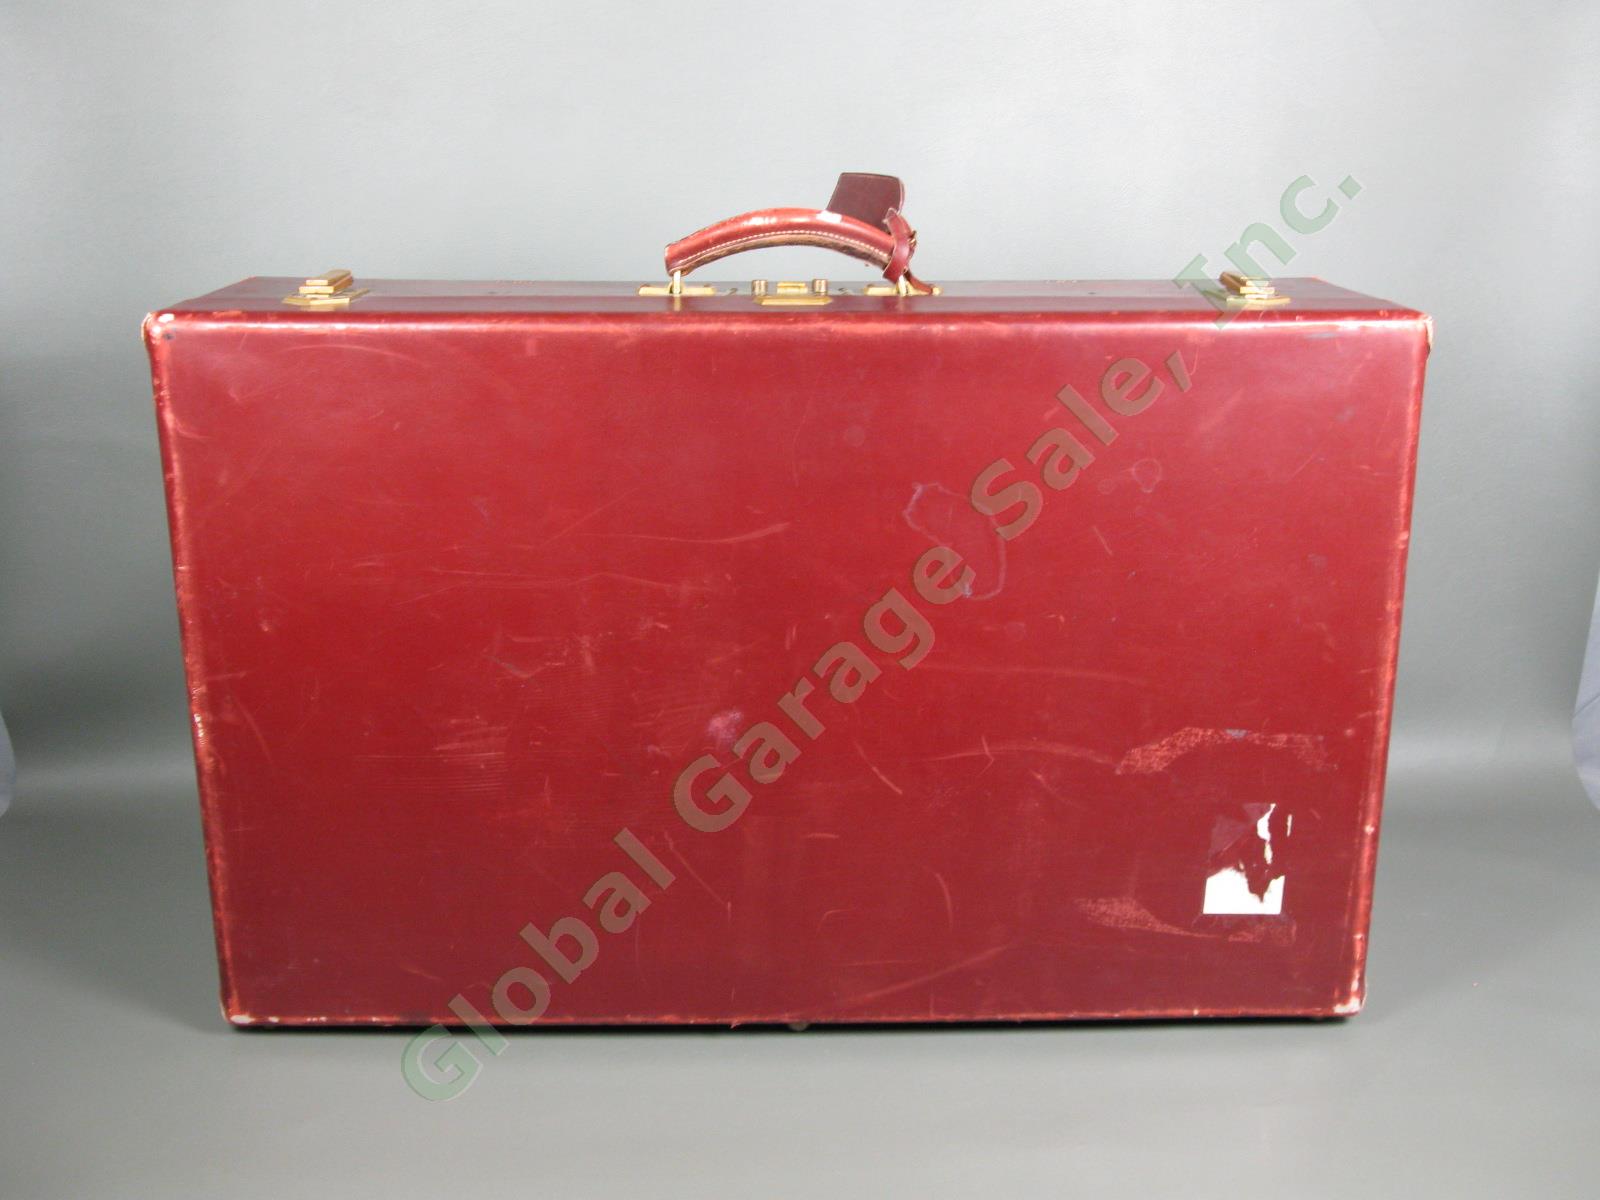 Vintage Hermes Paris Red Leather Travel Luggage Suitcase Original Brass w/ Keys 6